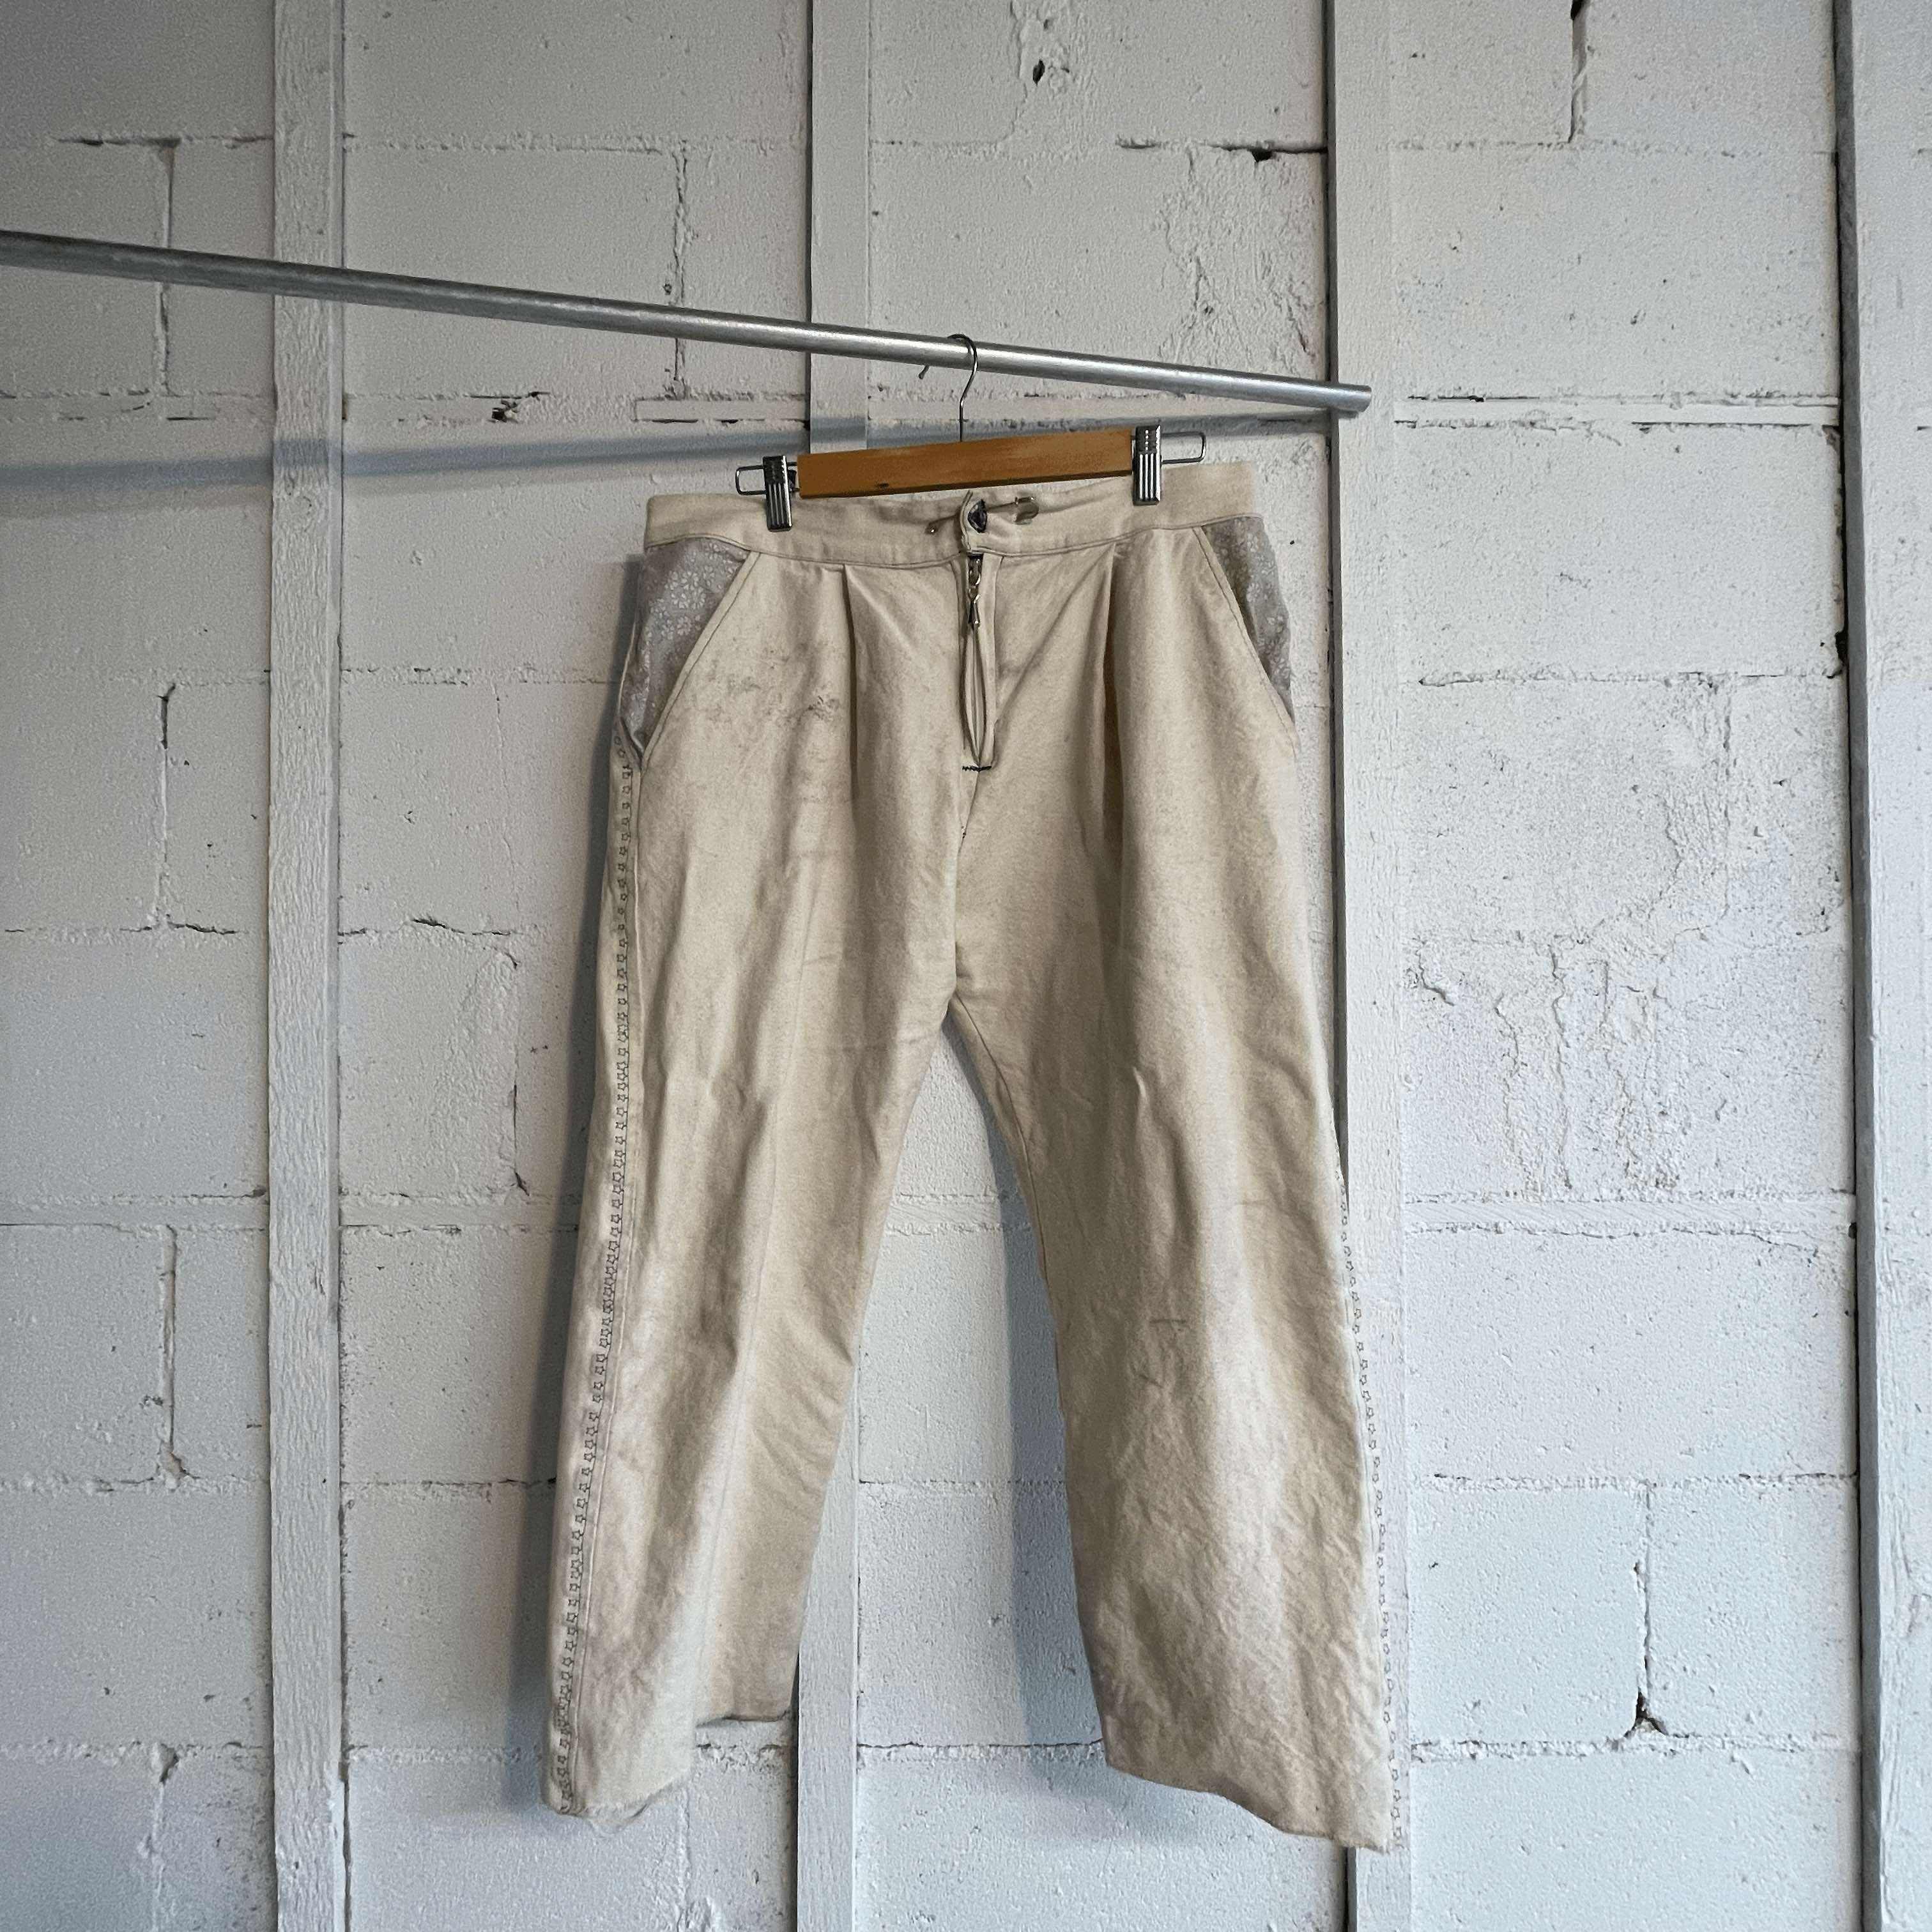 Smith pant prototype - wear test